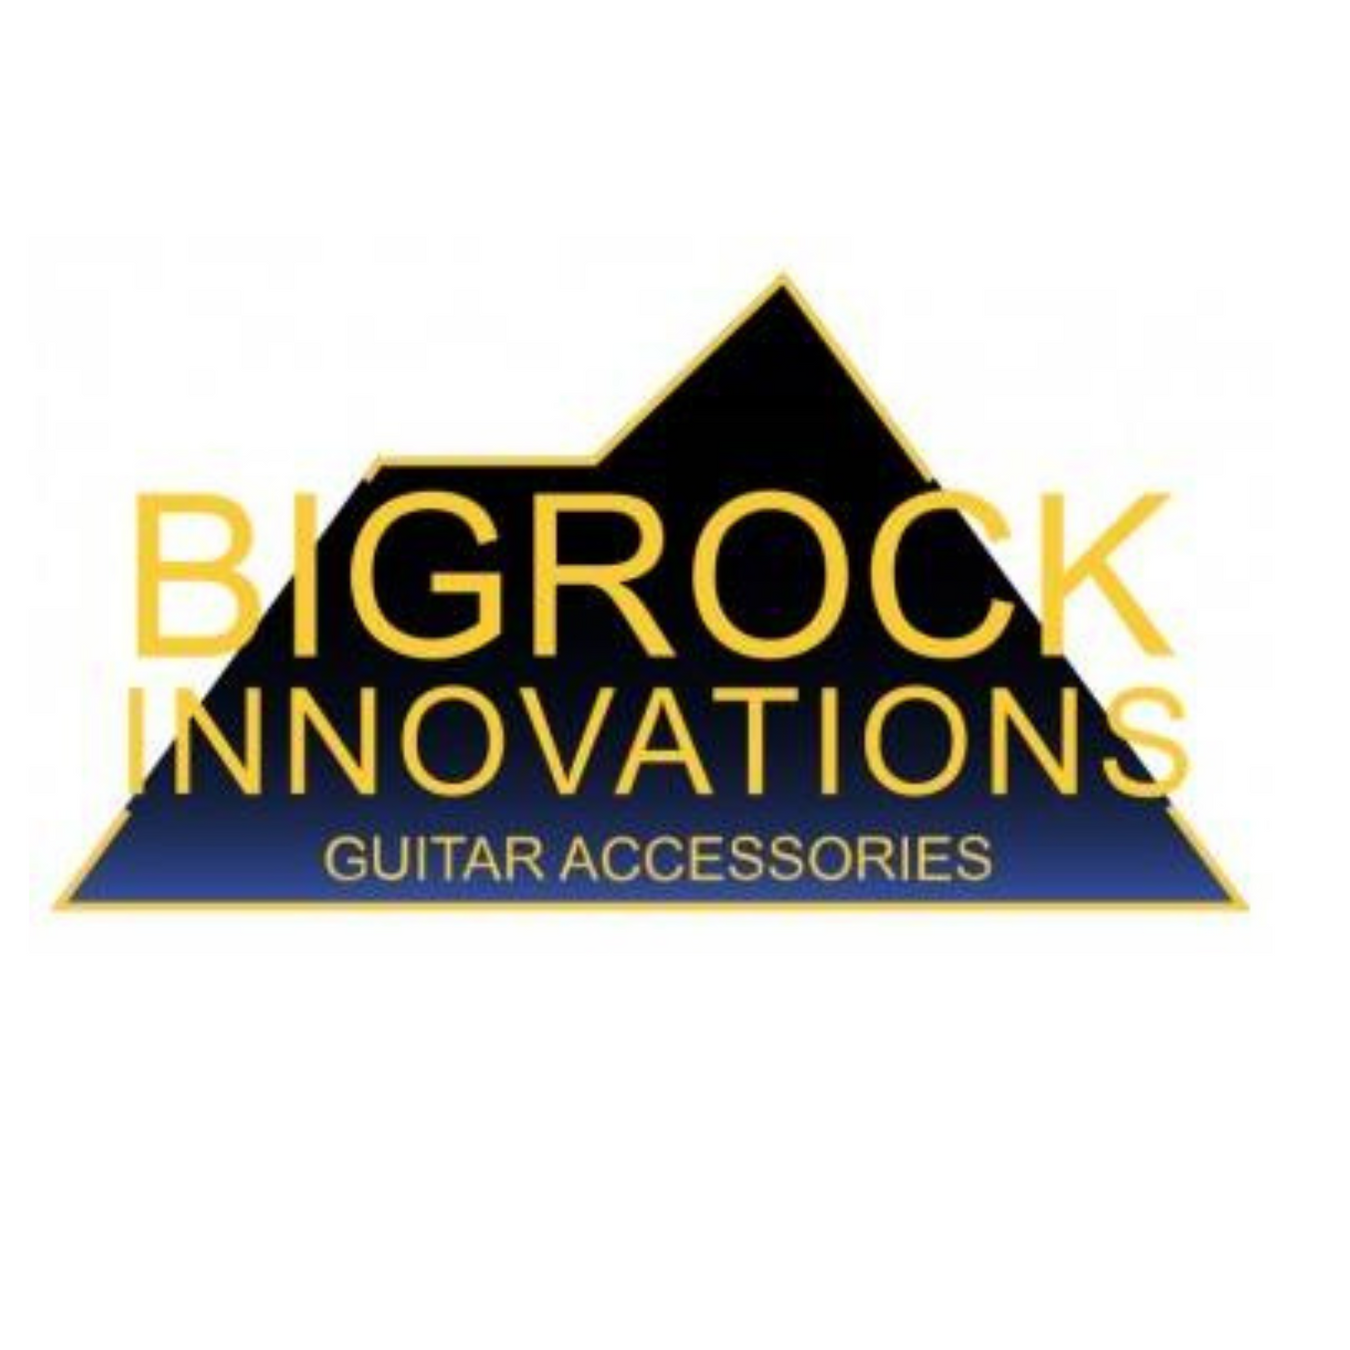 Bigrock Innovations